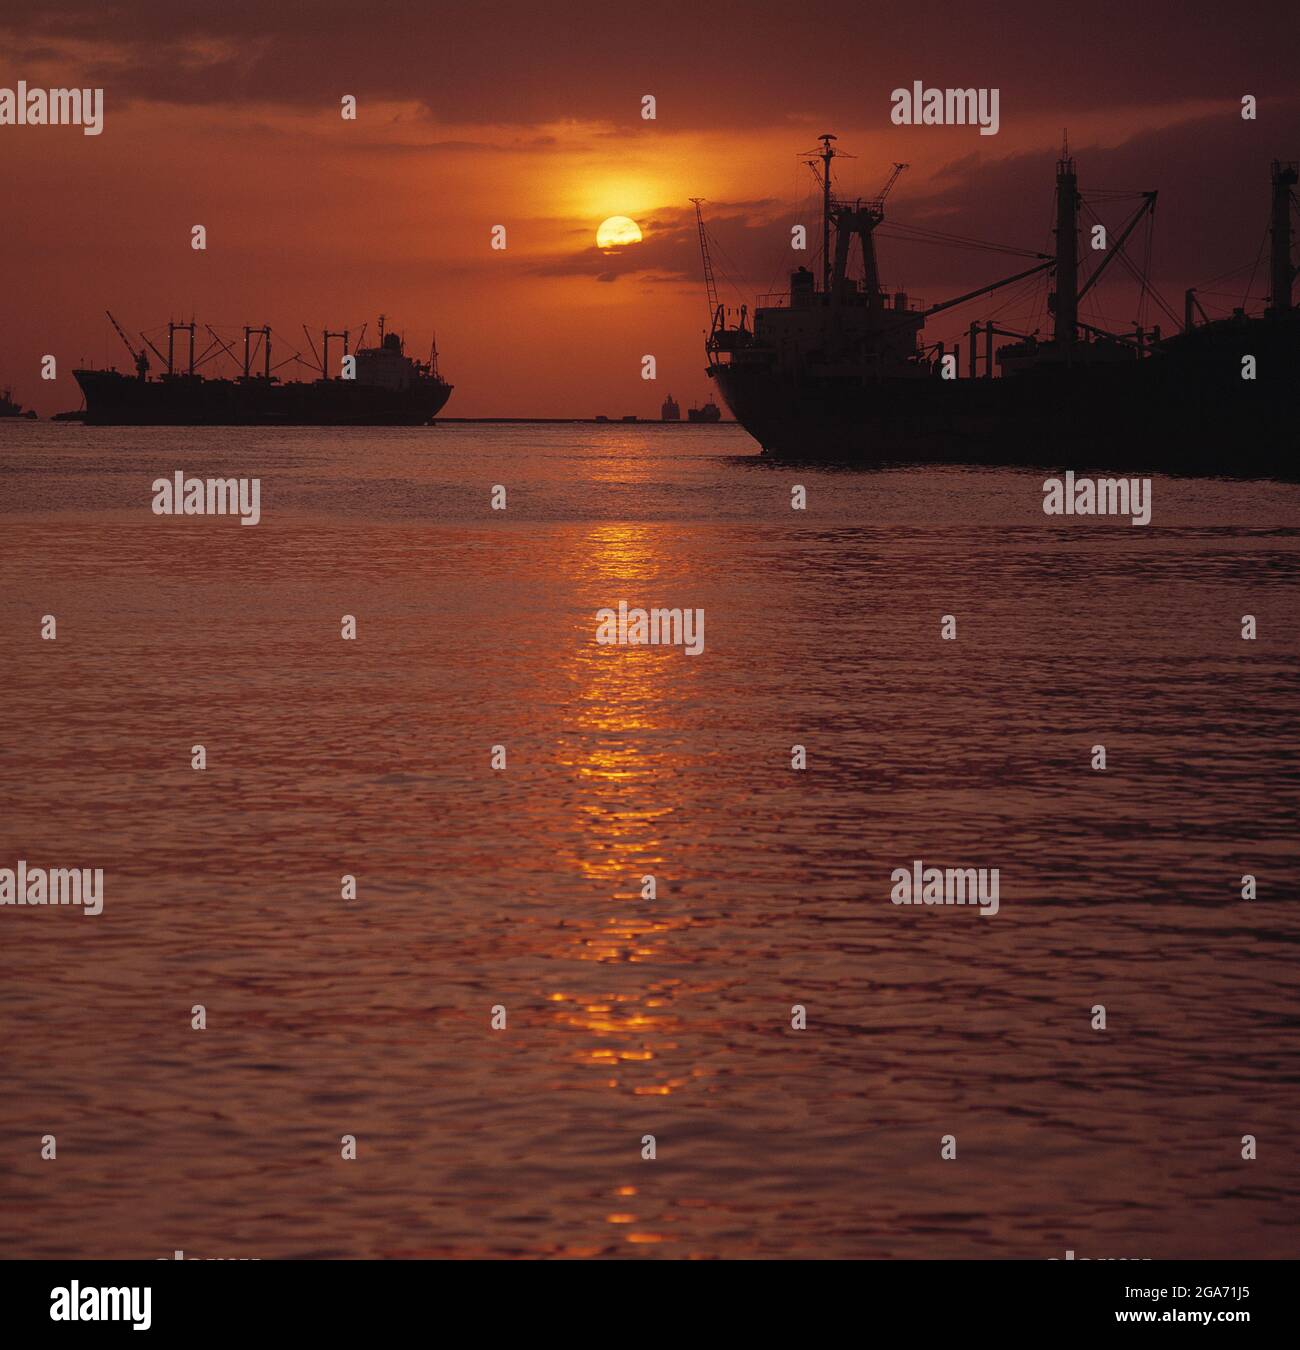 Philippines. Manila Bay sunset with ships. Stock Photo